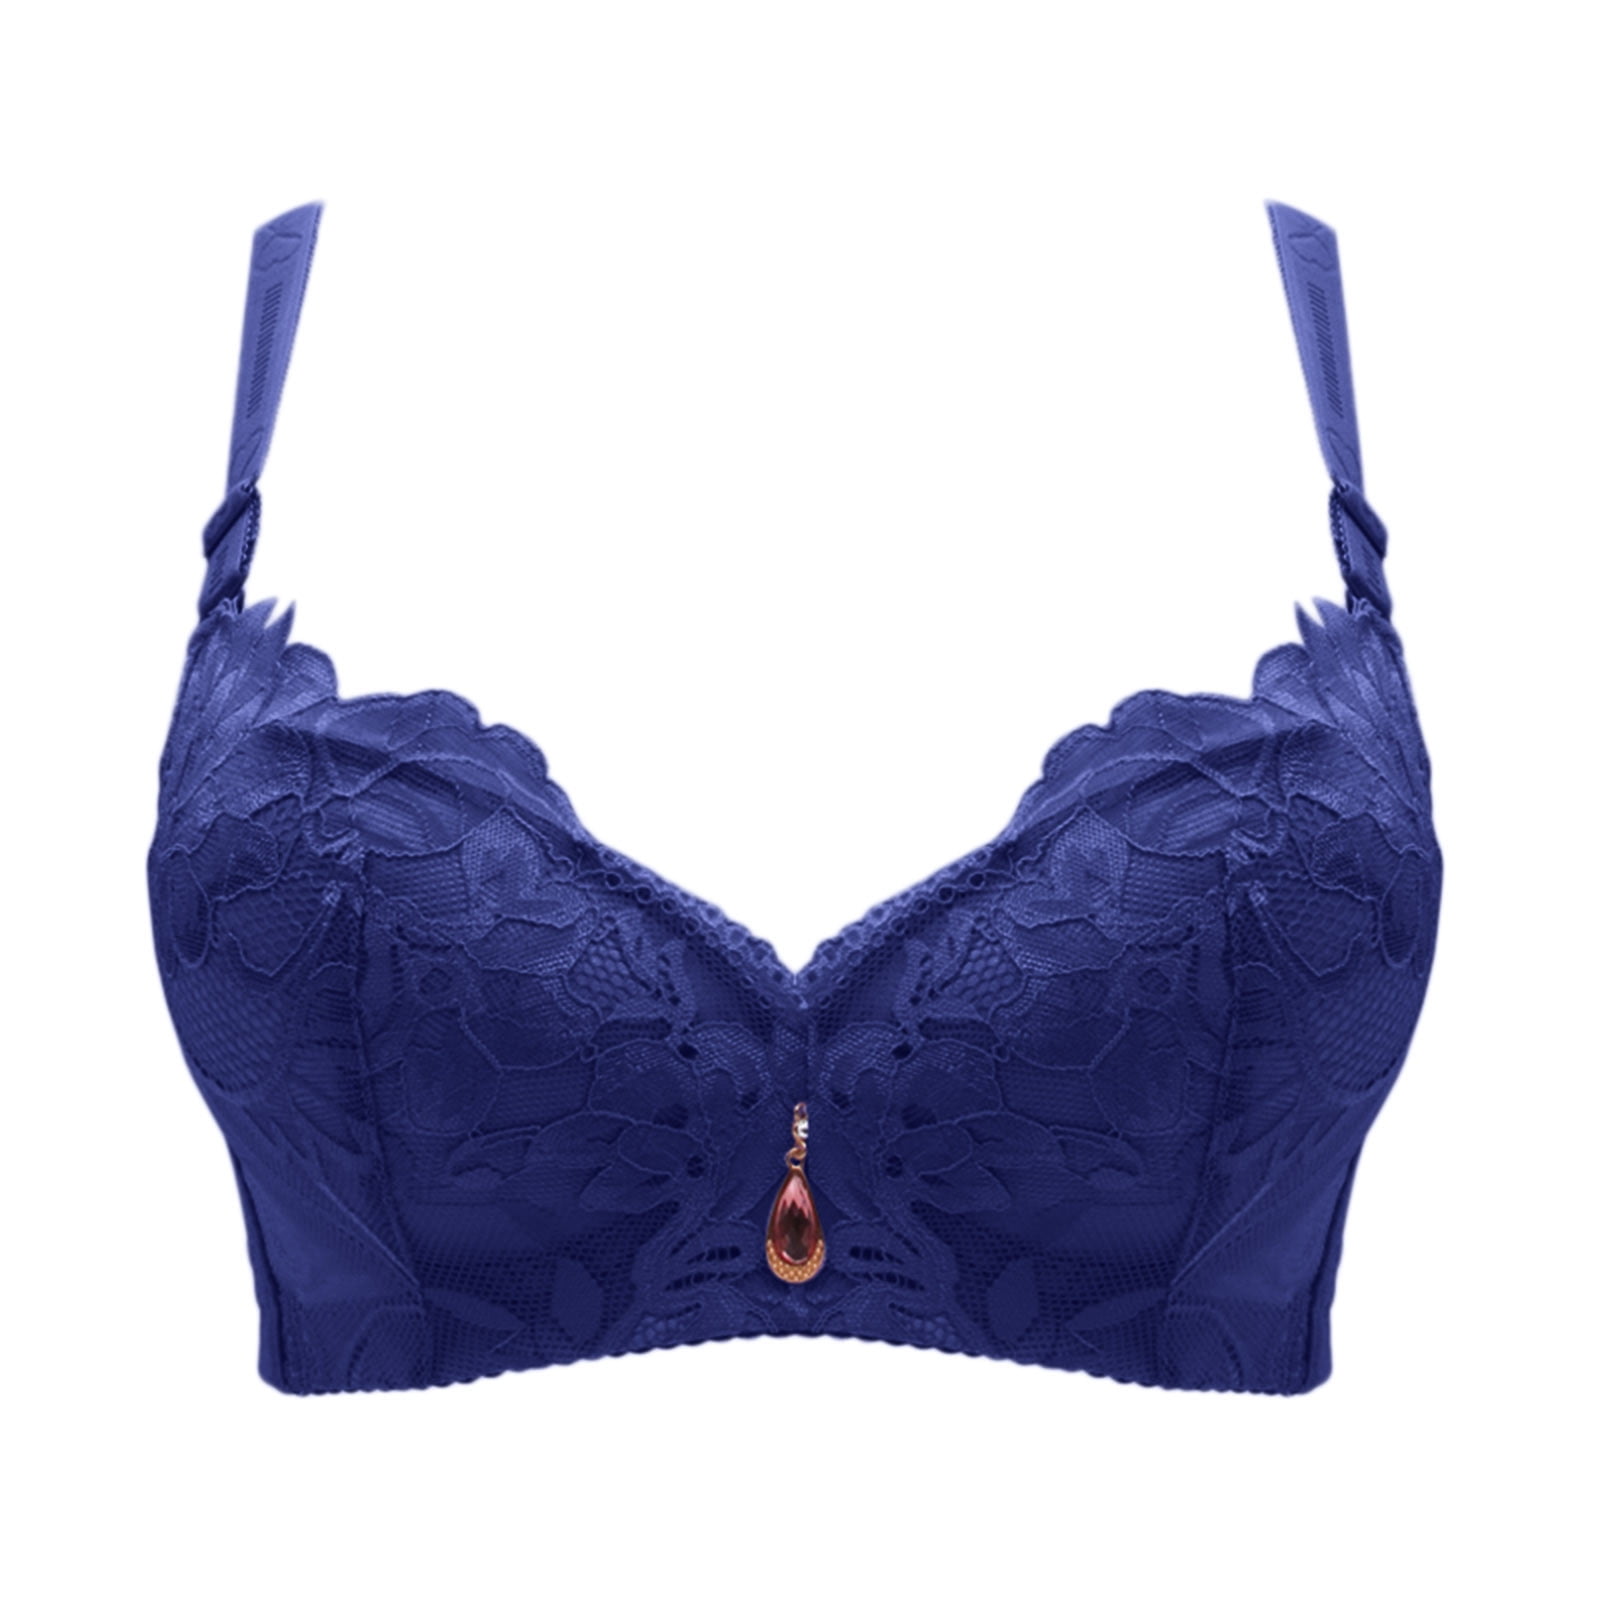 TOWED22 Bras,Women's Lace Balconette Bra See Sheer Underwire Plus